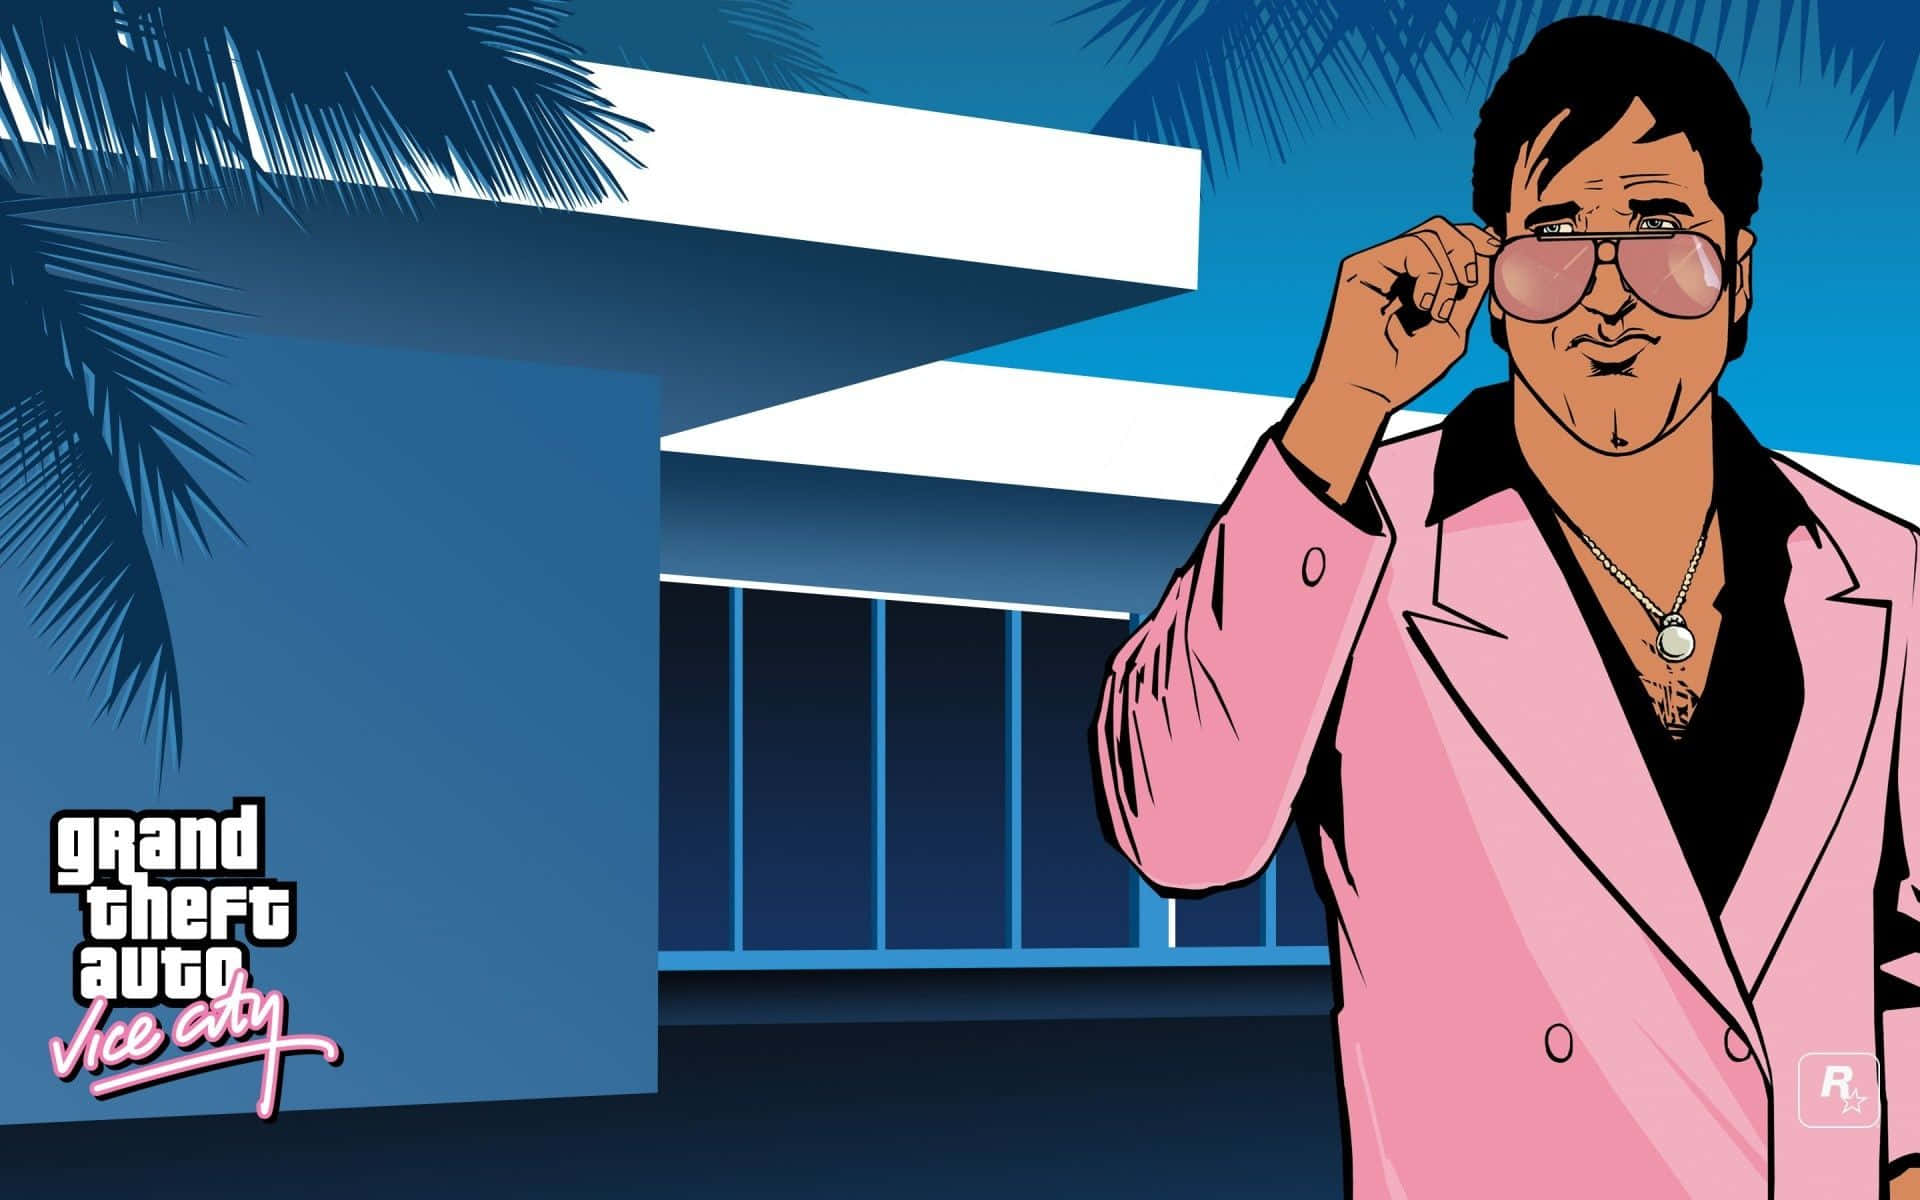 Ventur ind i Miami i Grand Theft Auto Vice City med denne dynamiske tapet! Wallpaper